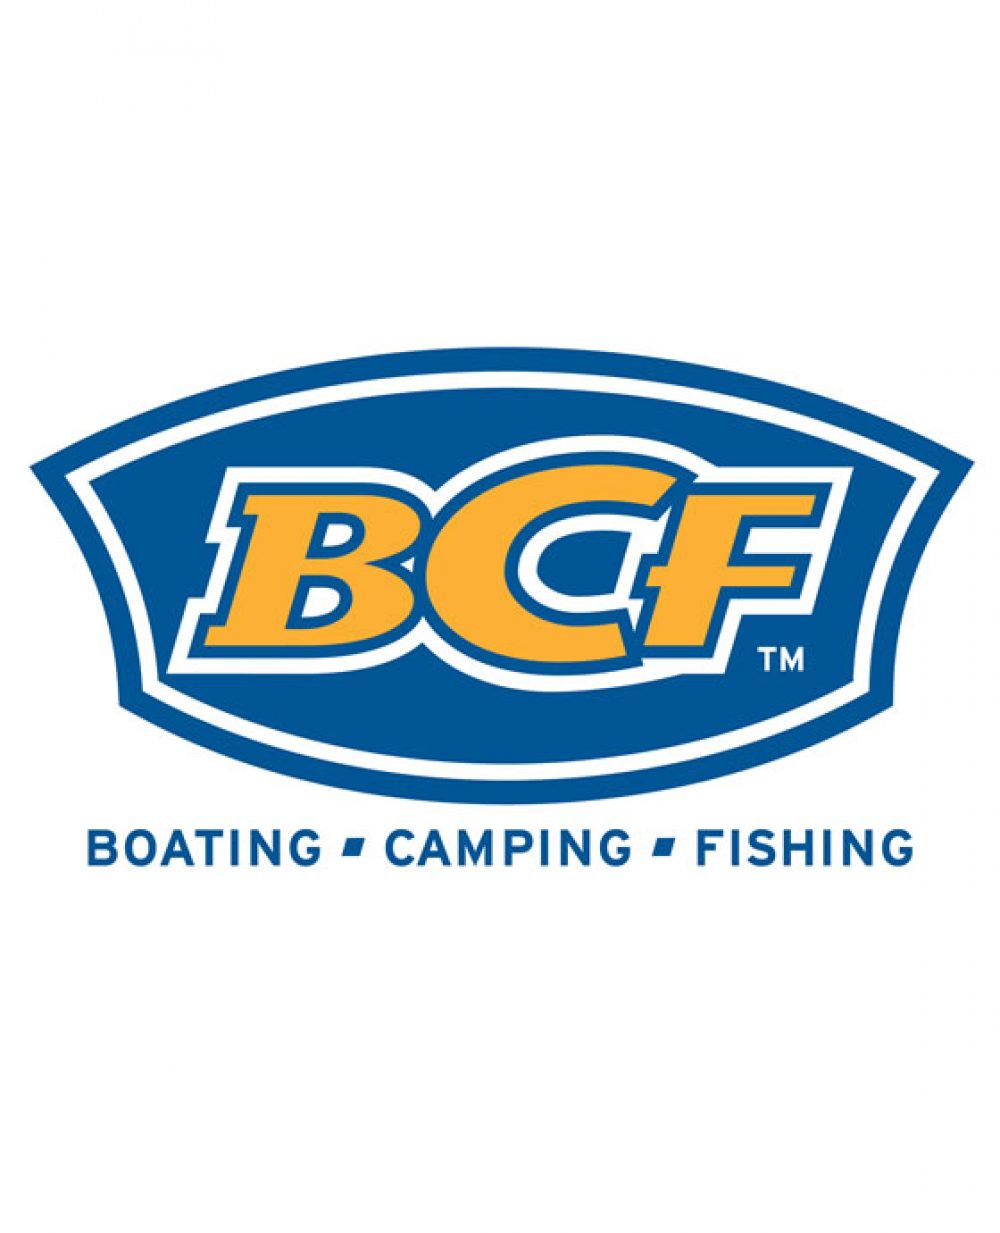 BCF Boating, Camping, Fishing - Gawler Business Development Group